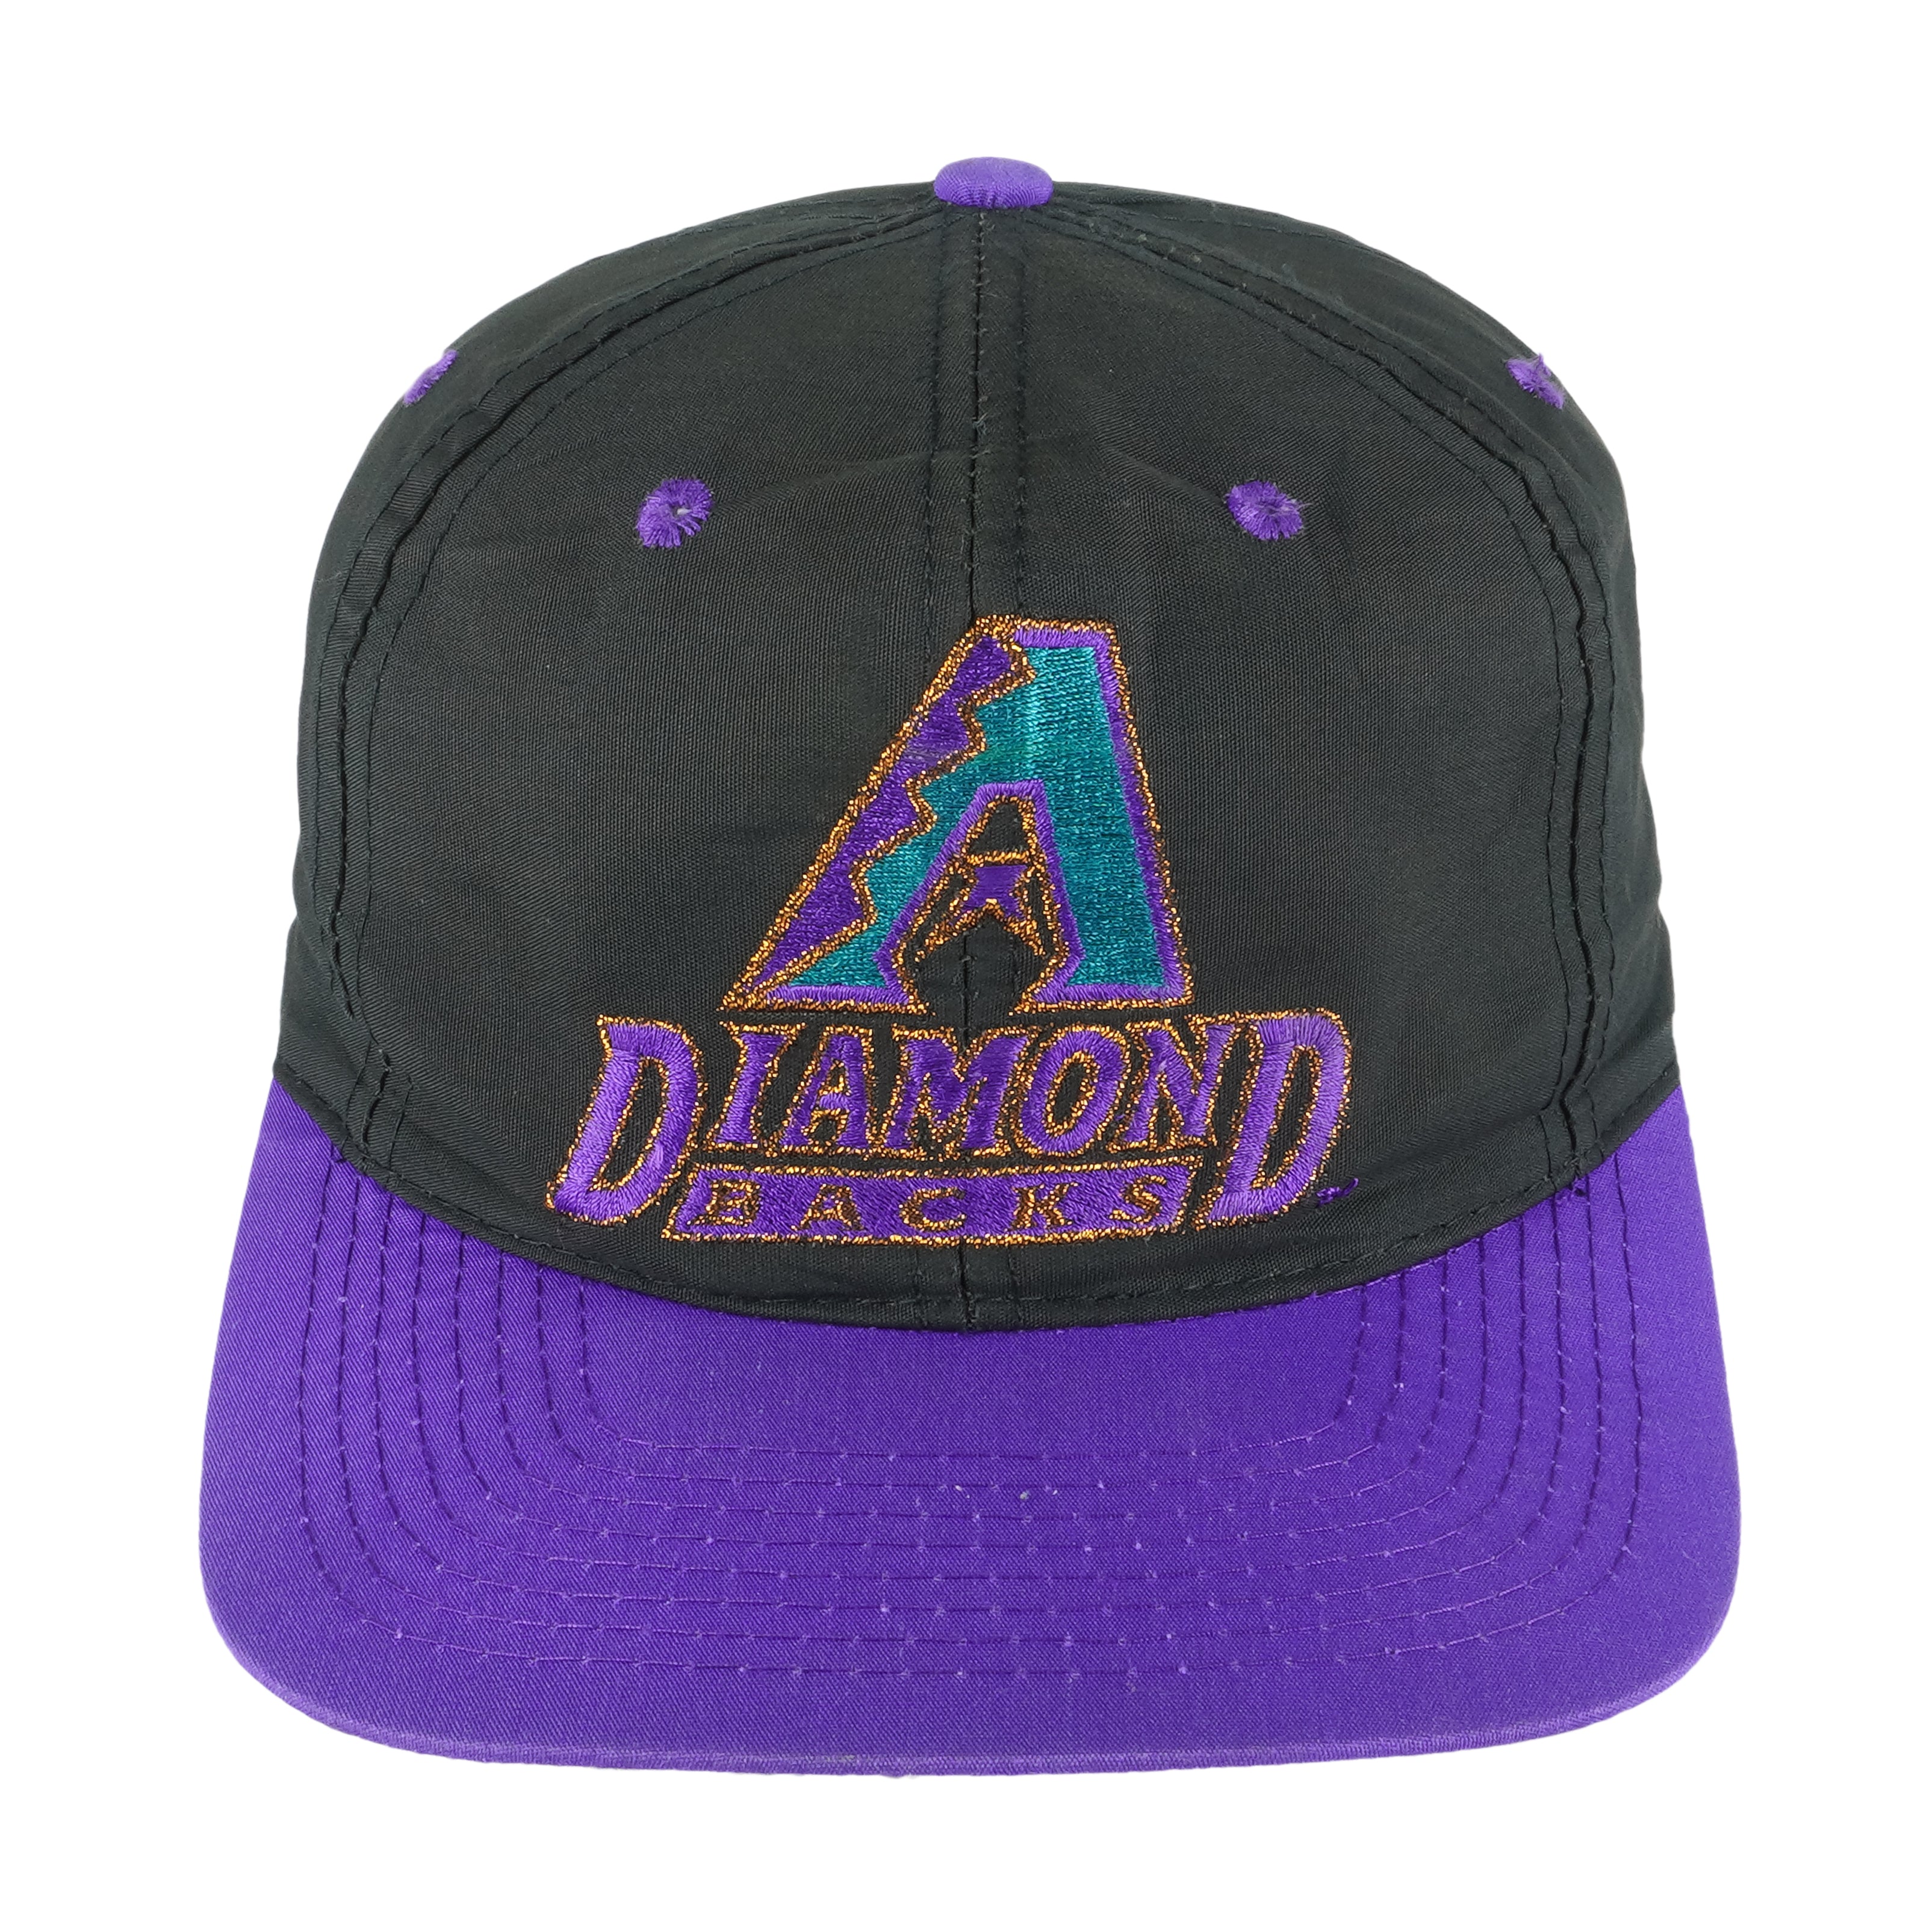 Vintage MLB (Nutmeg) - Arizona Diamondbacks Breakout T-Shirt 1995